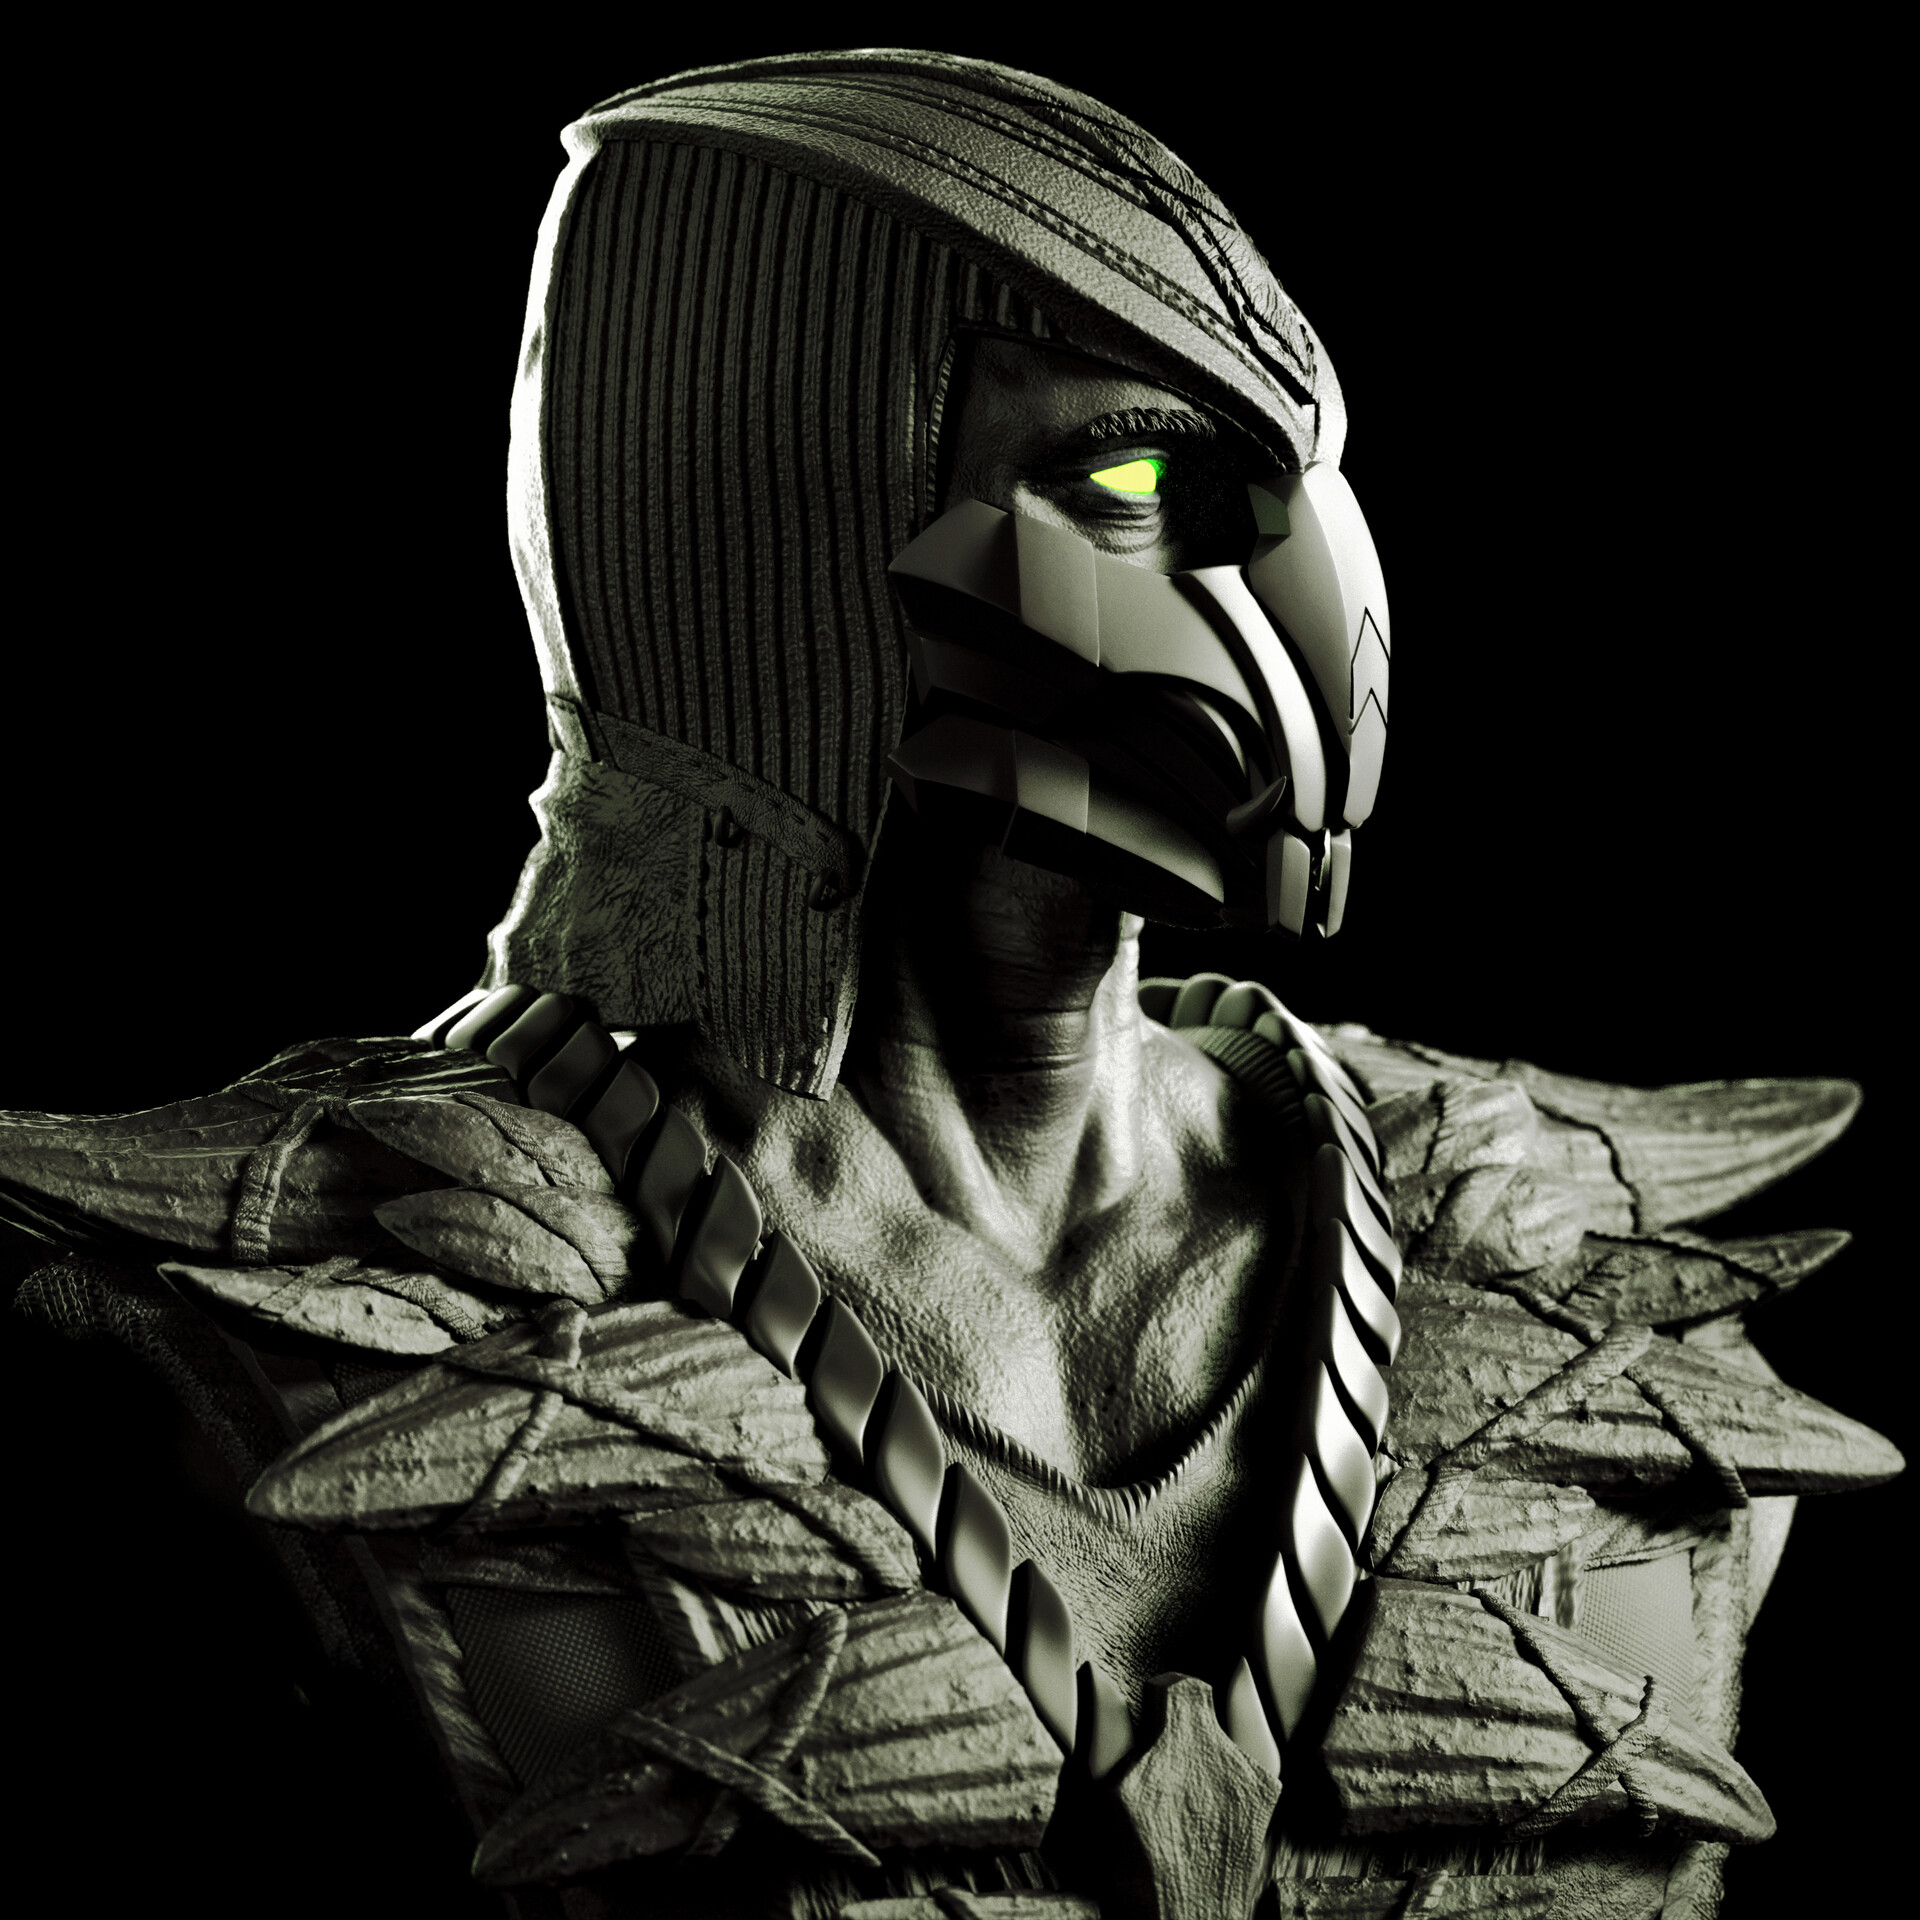 Reptile Concept from Mortal Kombat X  Mortal kombat, Mortal kombat x, Mortal  kombat characters